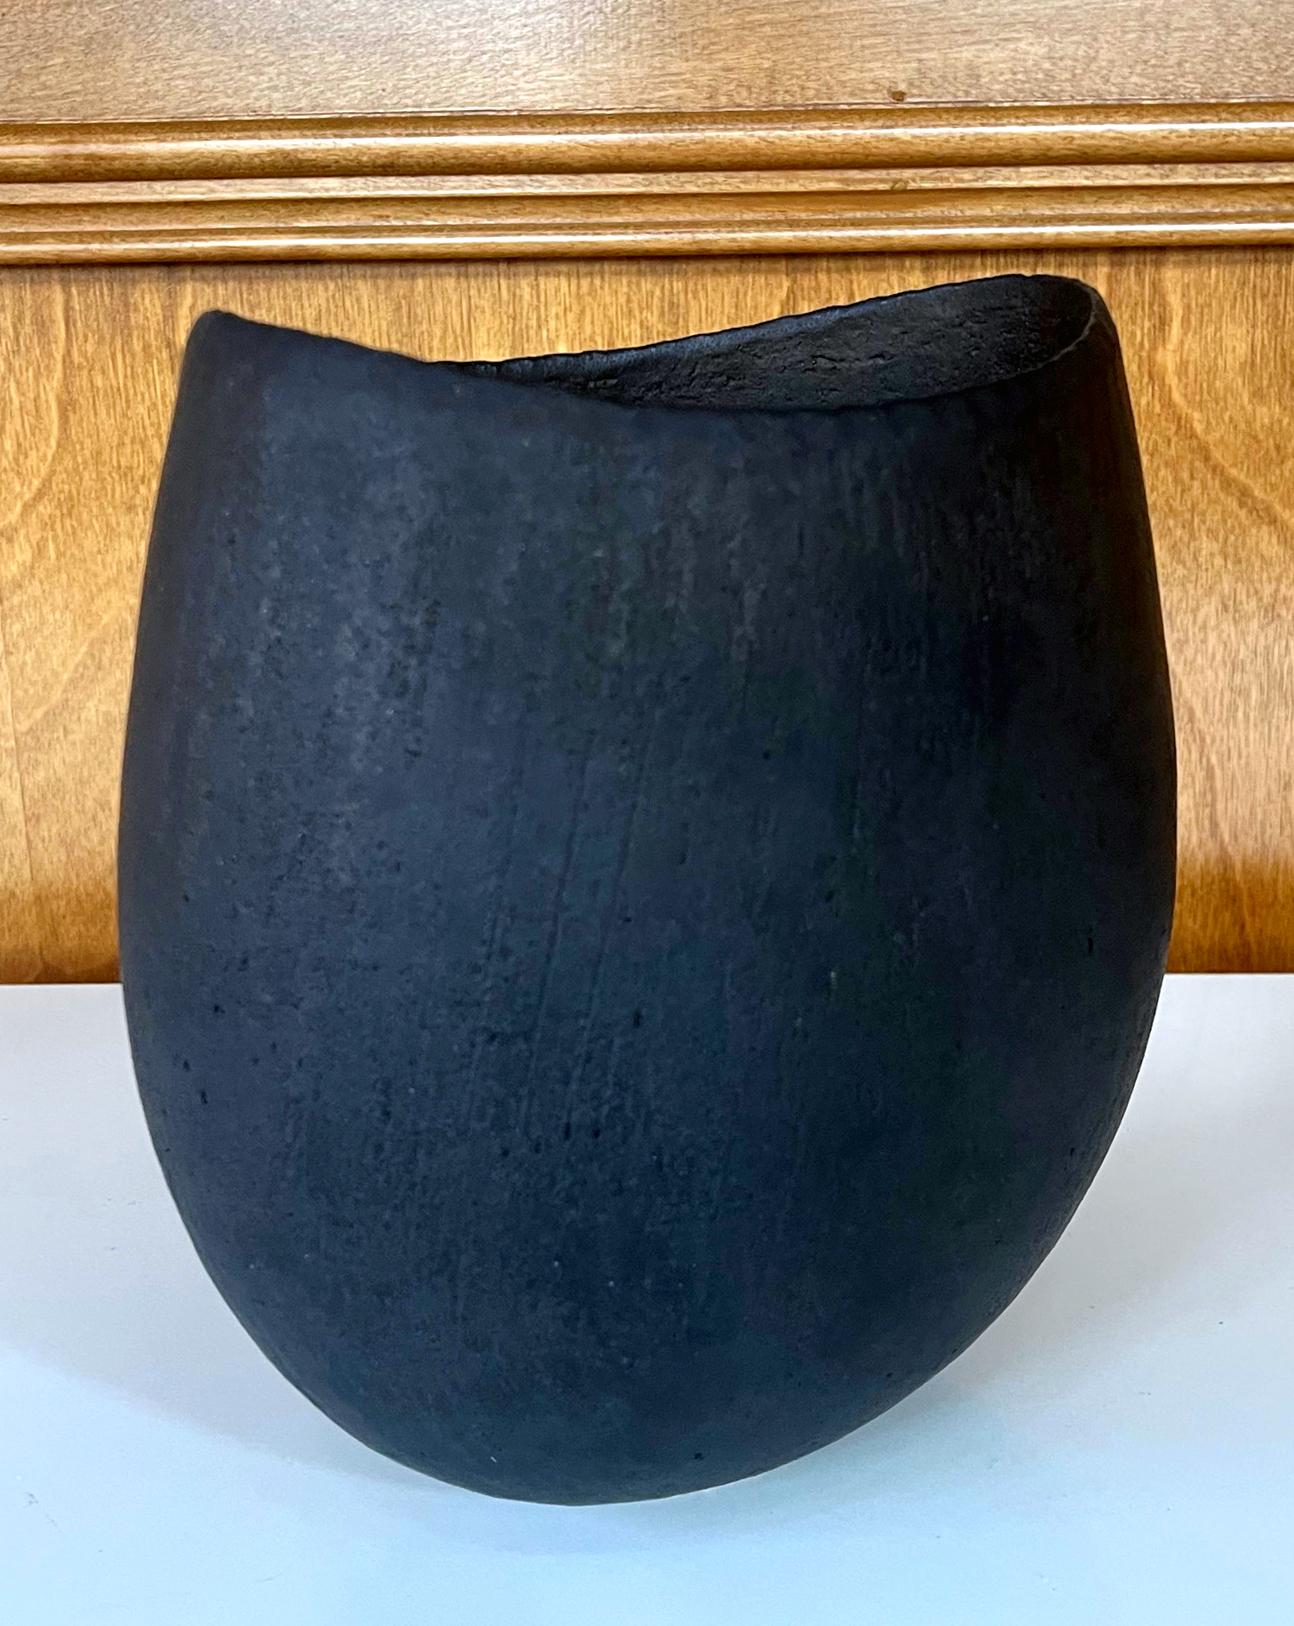 English Ceramic Oval Vessel by British Studio Potter John Ward For Sale